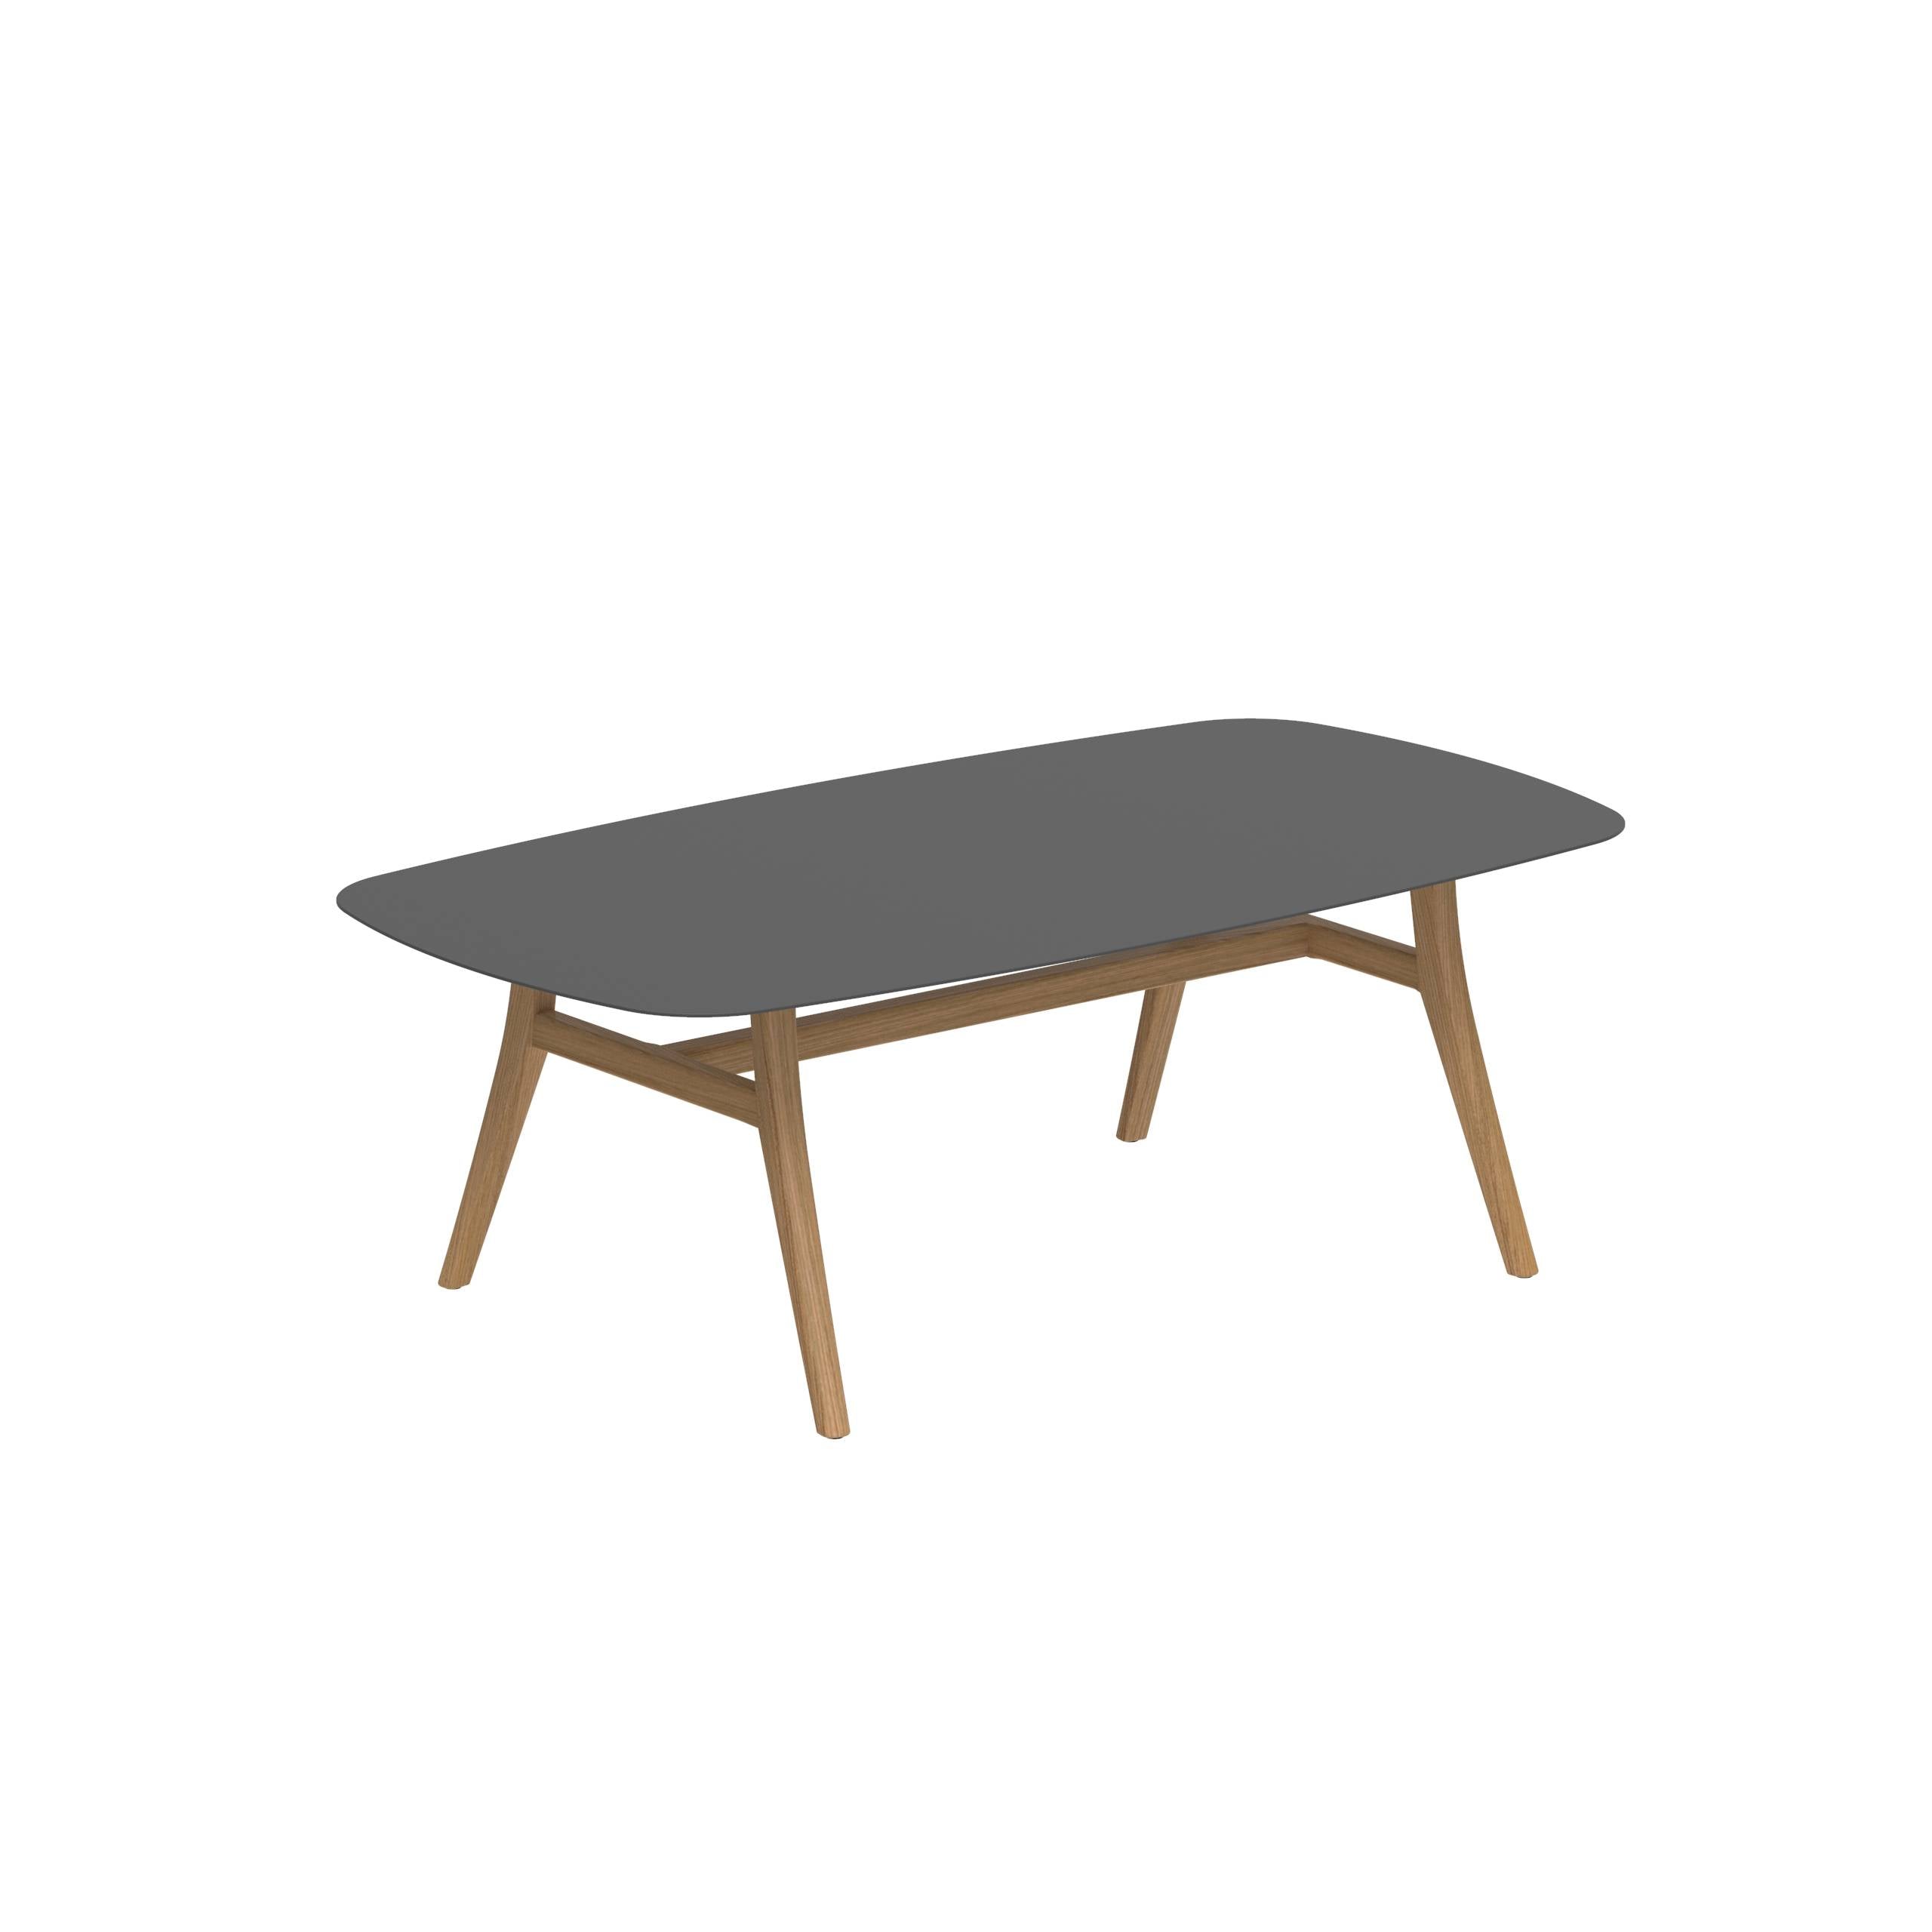 Zidiz Table 220x120cm Ceramic Black